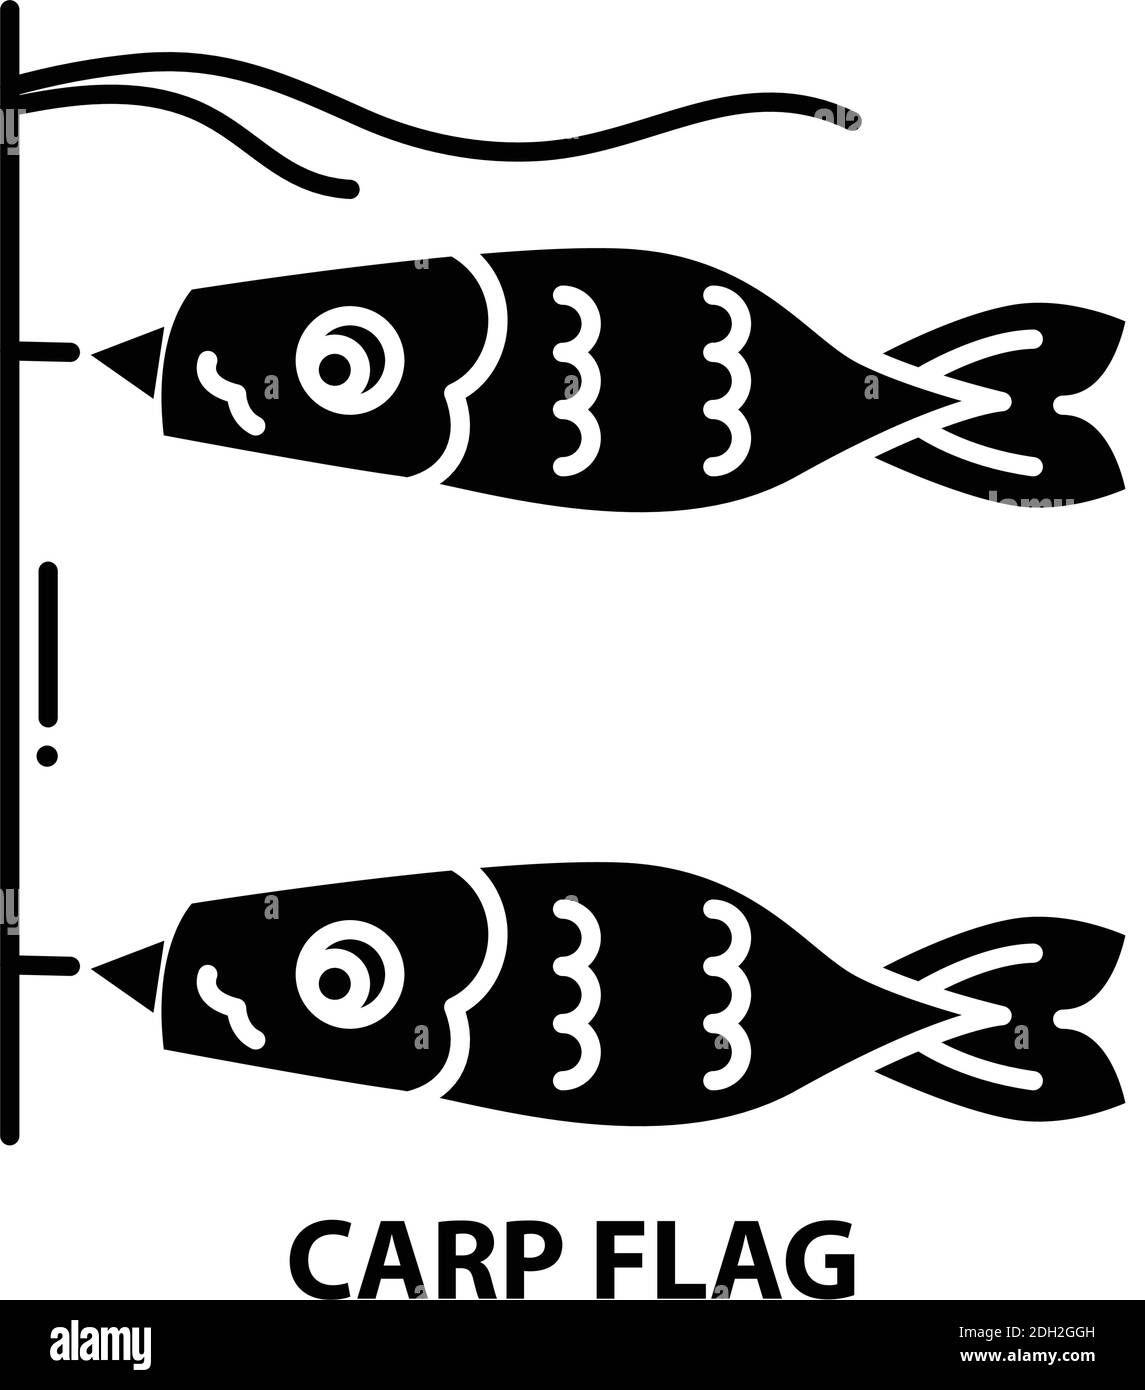 carp flag icon, black vector sign with editable strokes, concept illustration Stock Vector